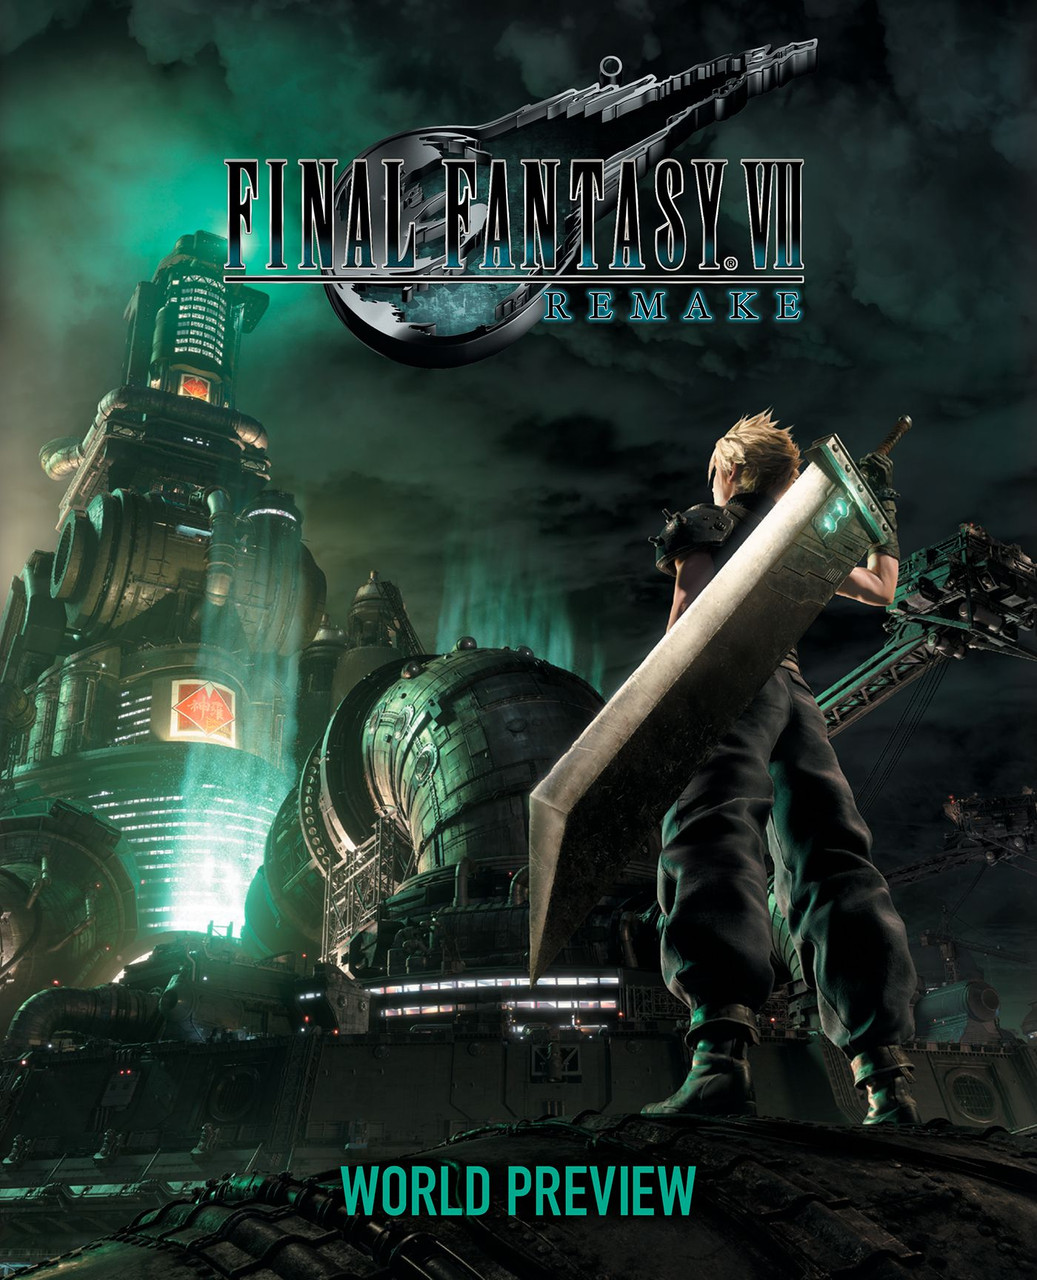 Final Fantasy VII Remake for Xbox One up for preorder on Media Markt Spain